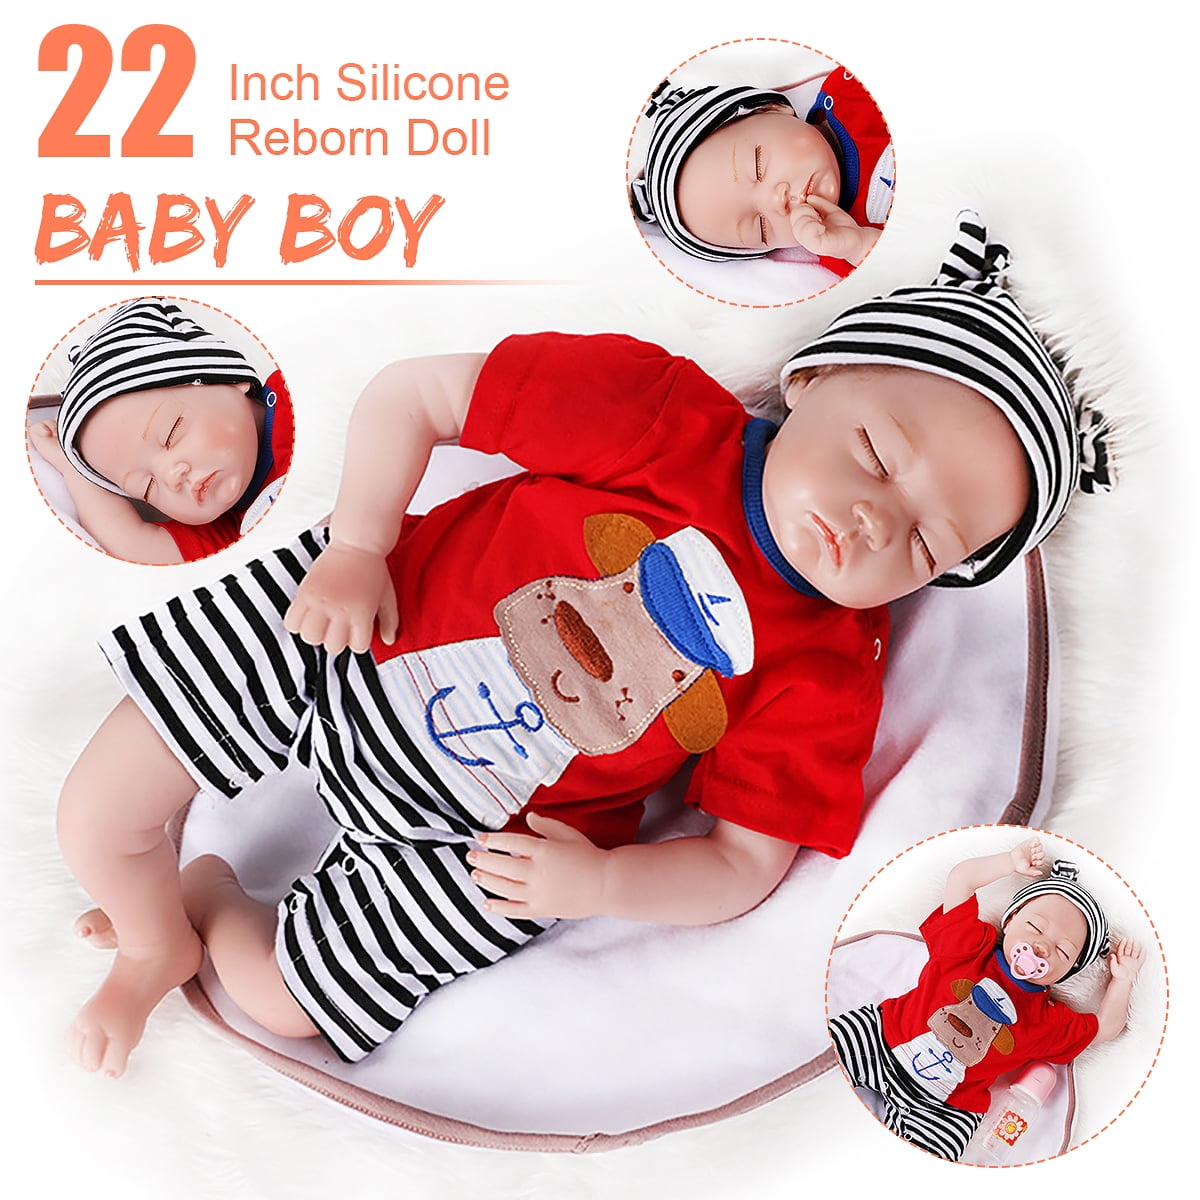 22" Full Body Silicone Vinyl Reborn Baby Boy Doll Handmade Lifelike Newborn Toys 